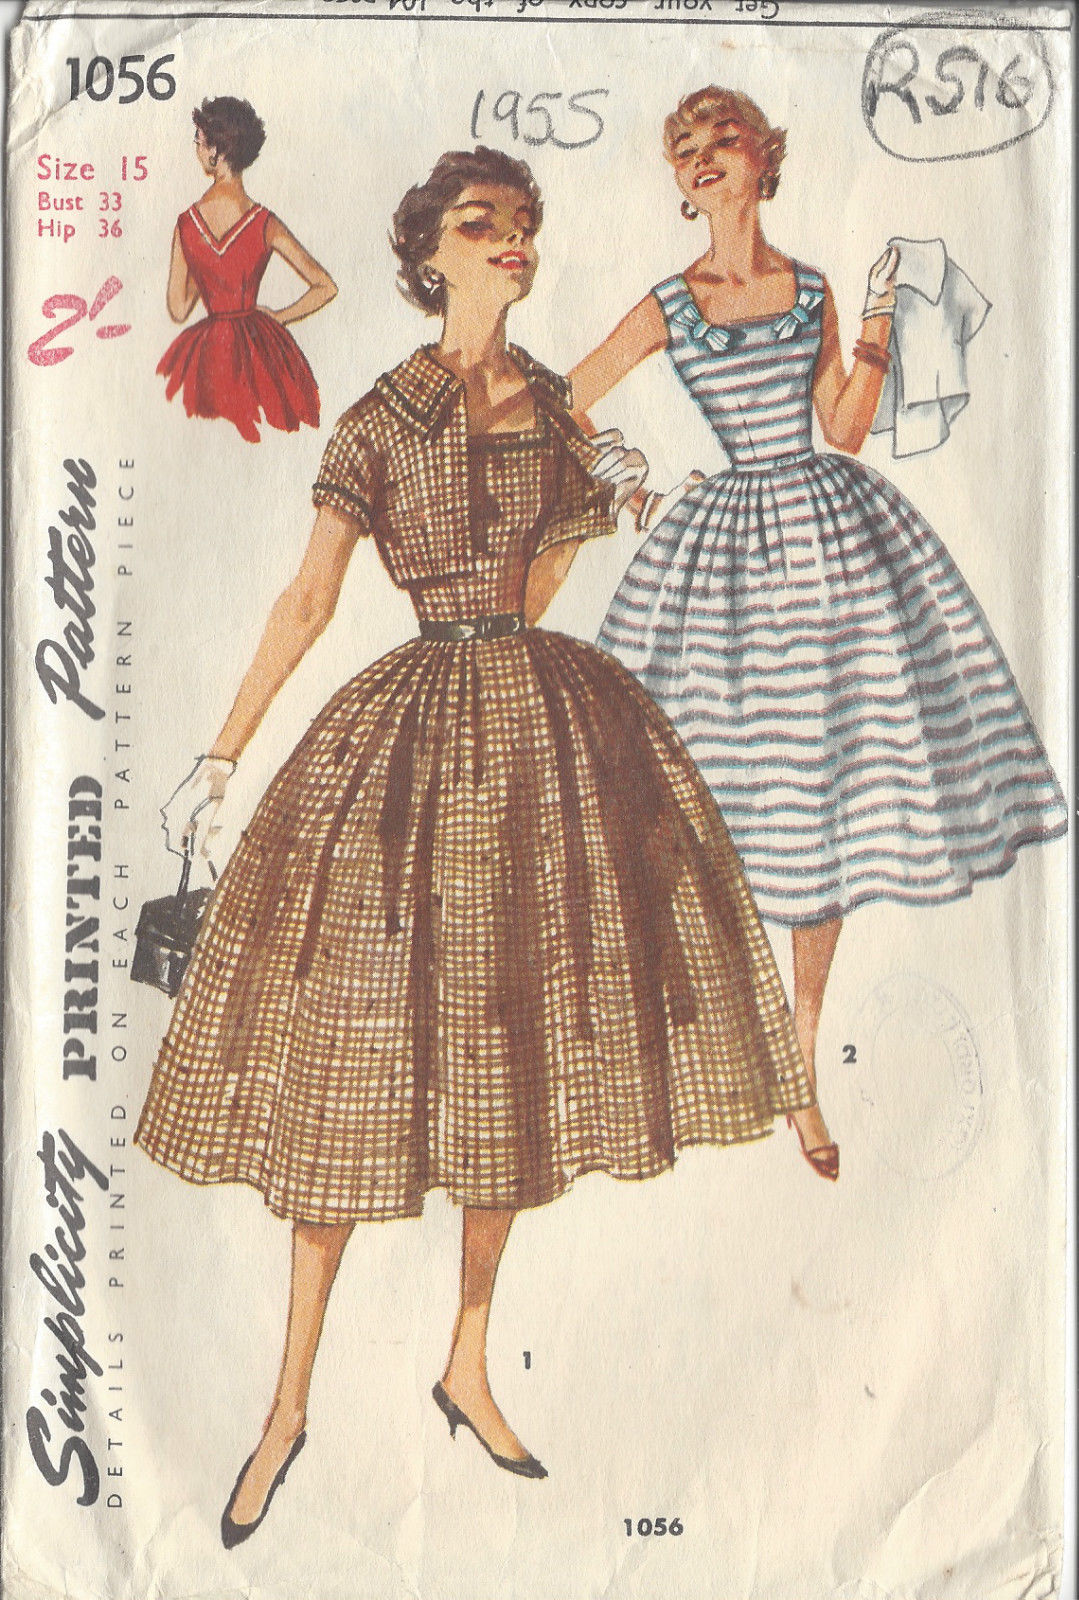 1955 Vintage Sewing Pattern DRESS JACKET B33